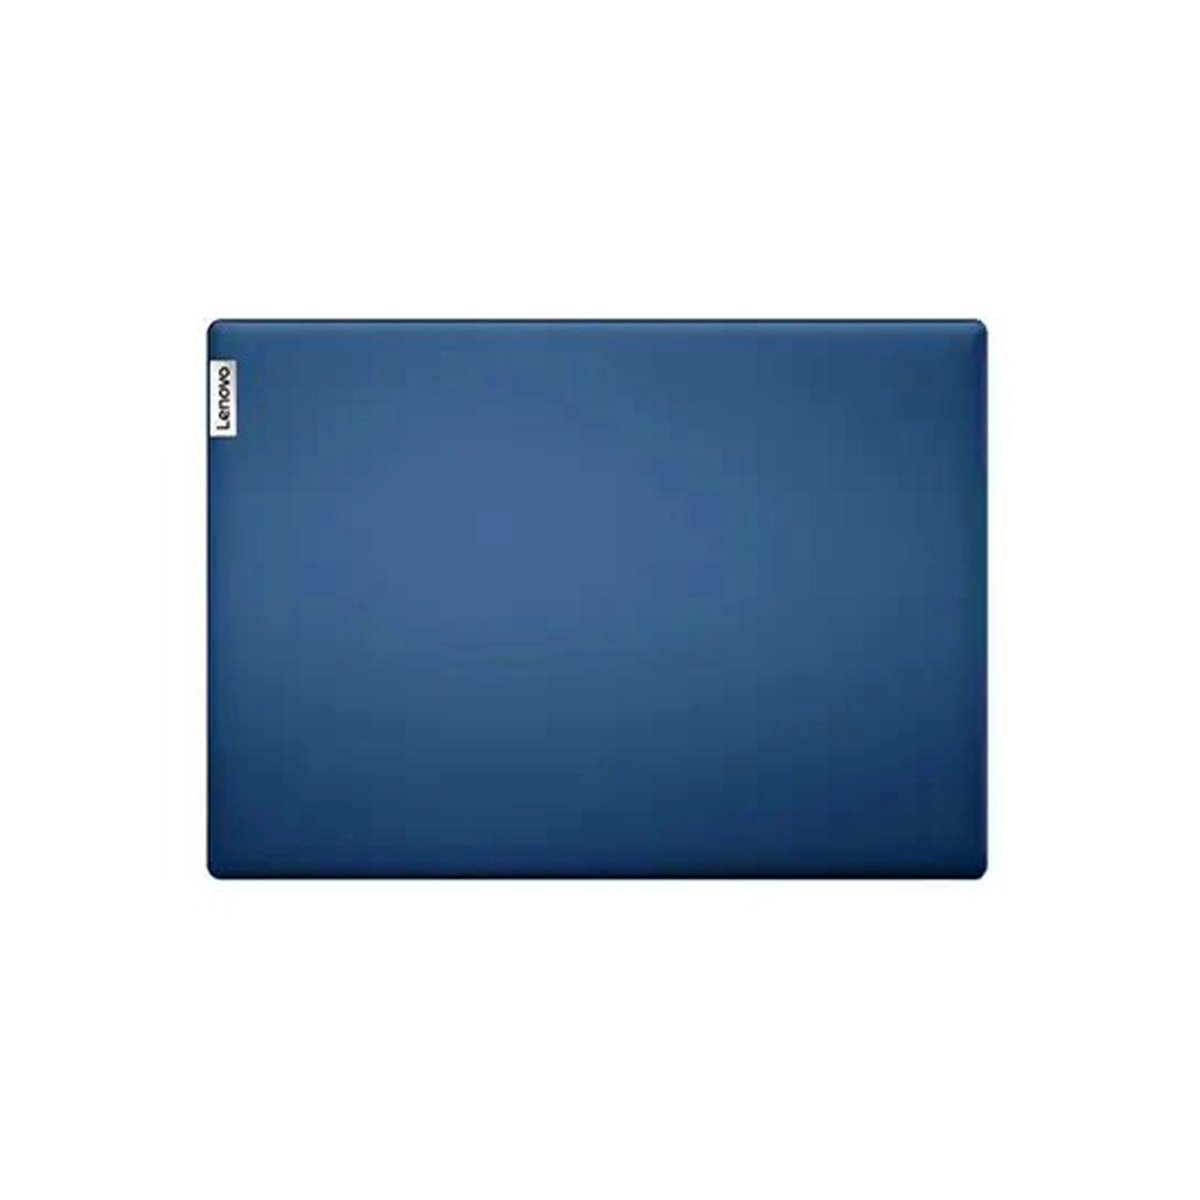 Lenovo IdeaPad 1 81VU009HAD Laptop - 14” FHD Display, 10th Gen Intel Celeron N4020, 4GB RAM, 128 SSD, Intel UHD Graphics, Ice Blue